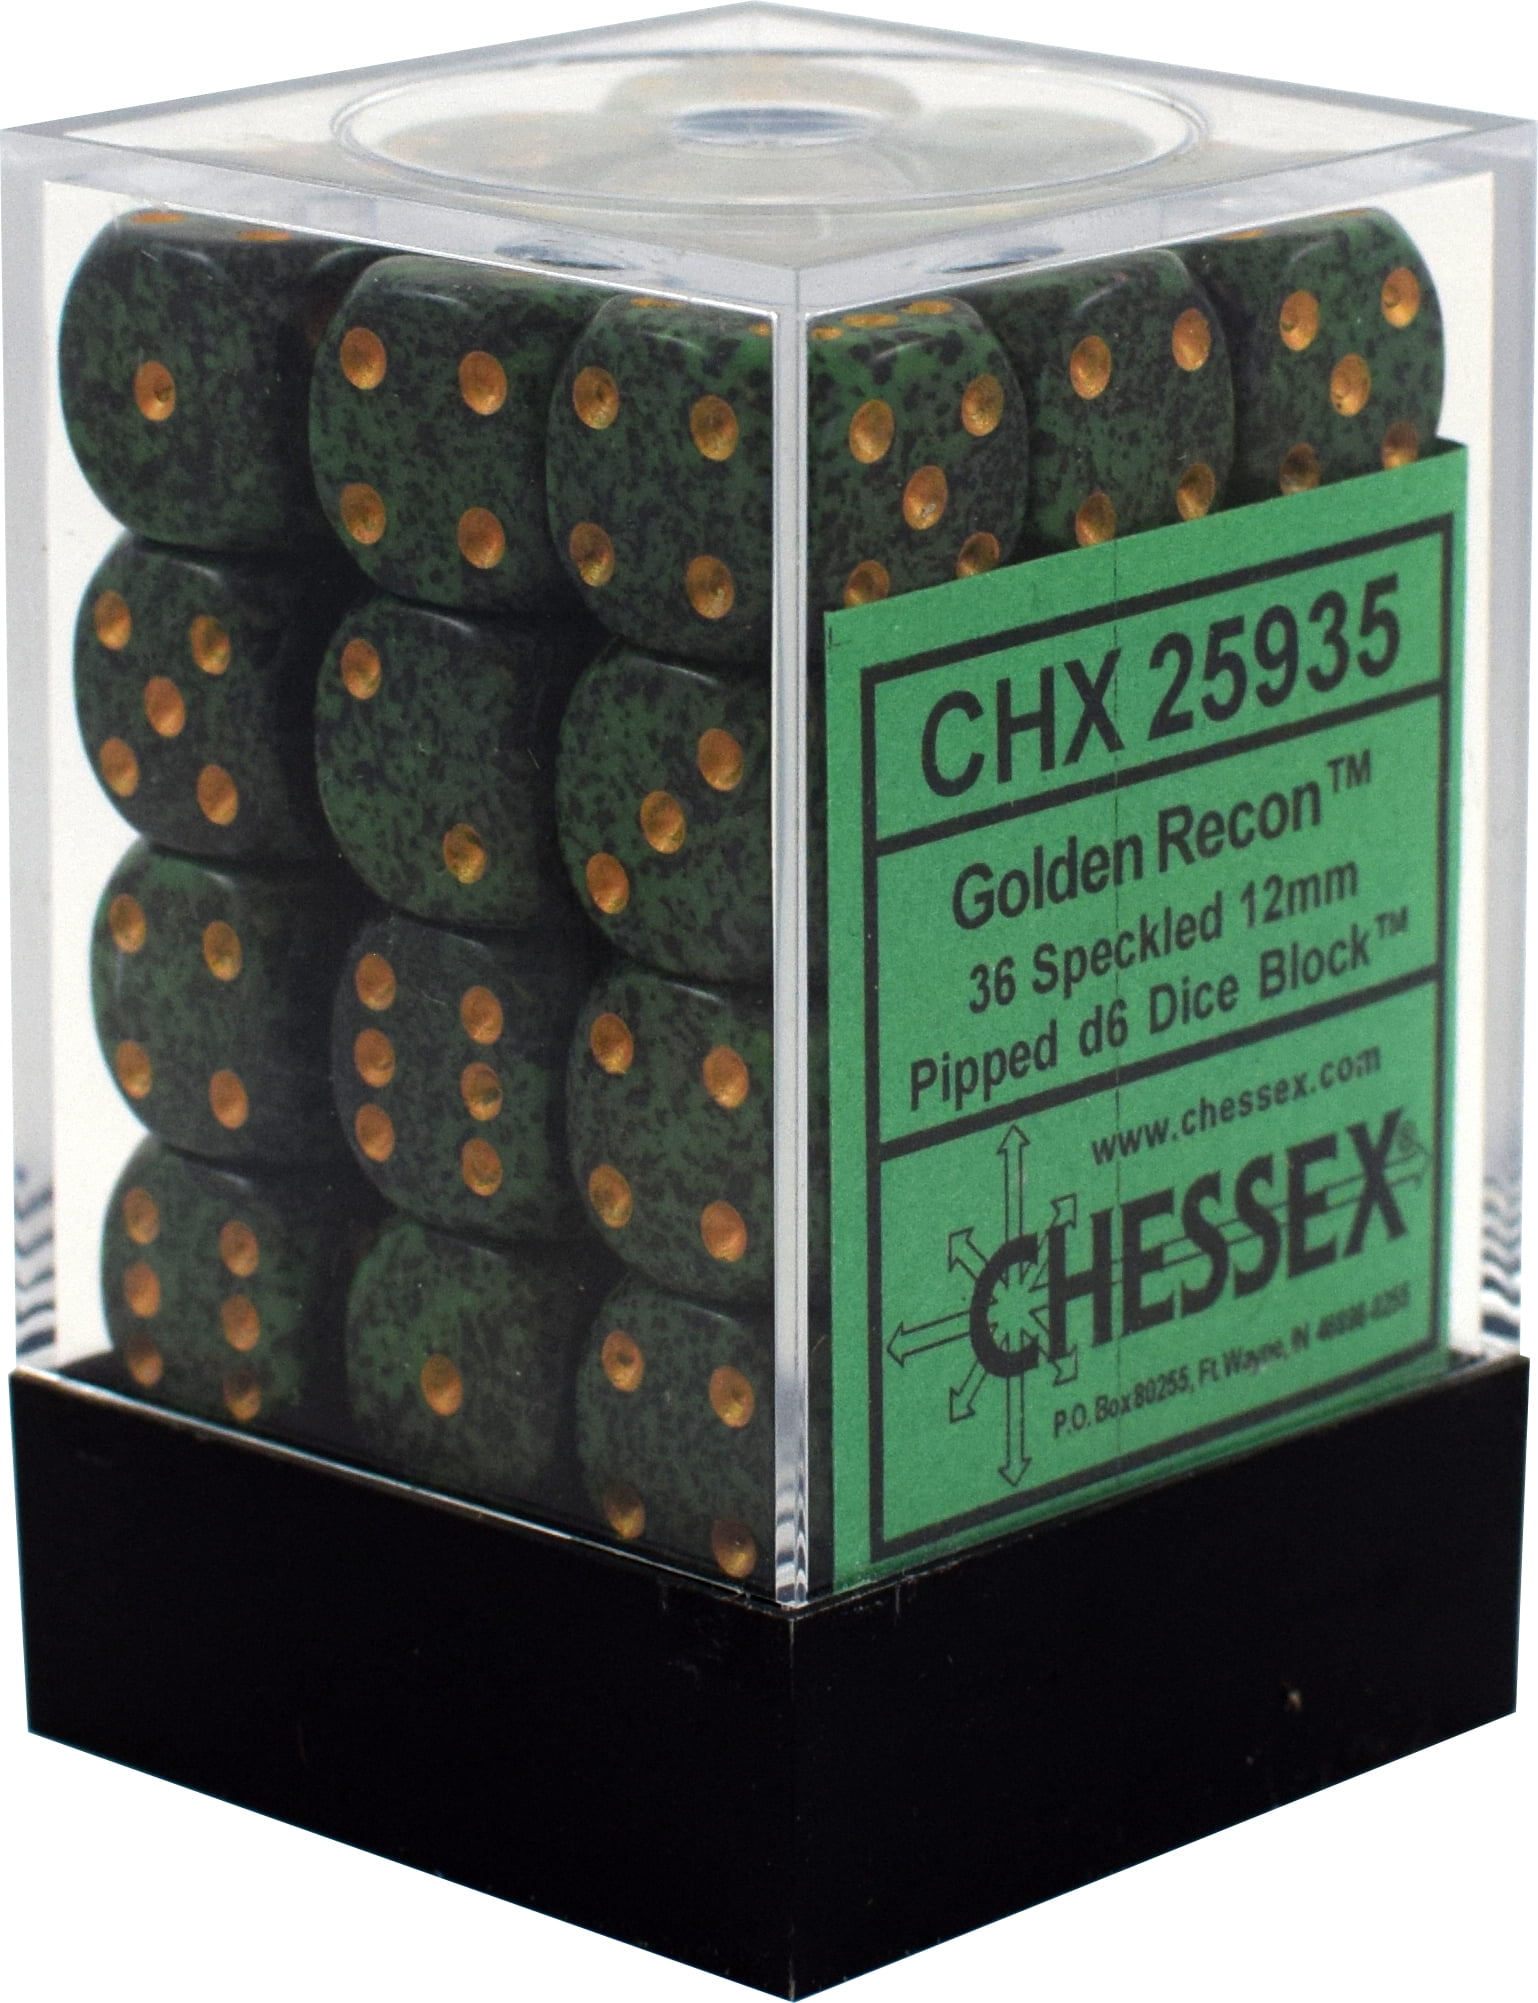 CHESSEX Speckled GOLDEN Recon w6 12mm SET DI DADI chx25935 